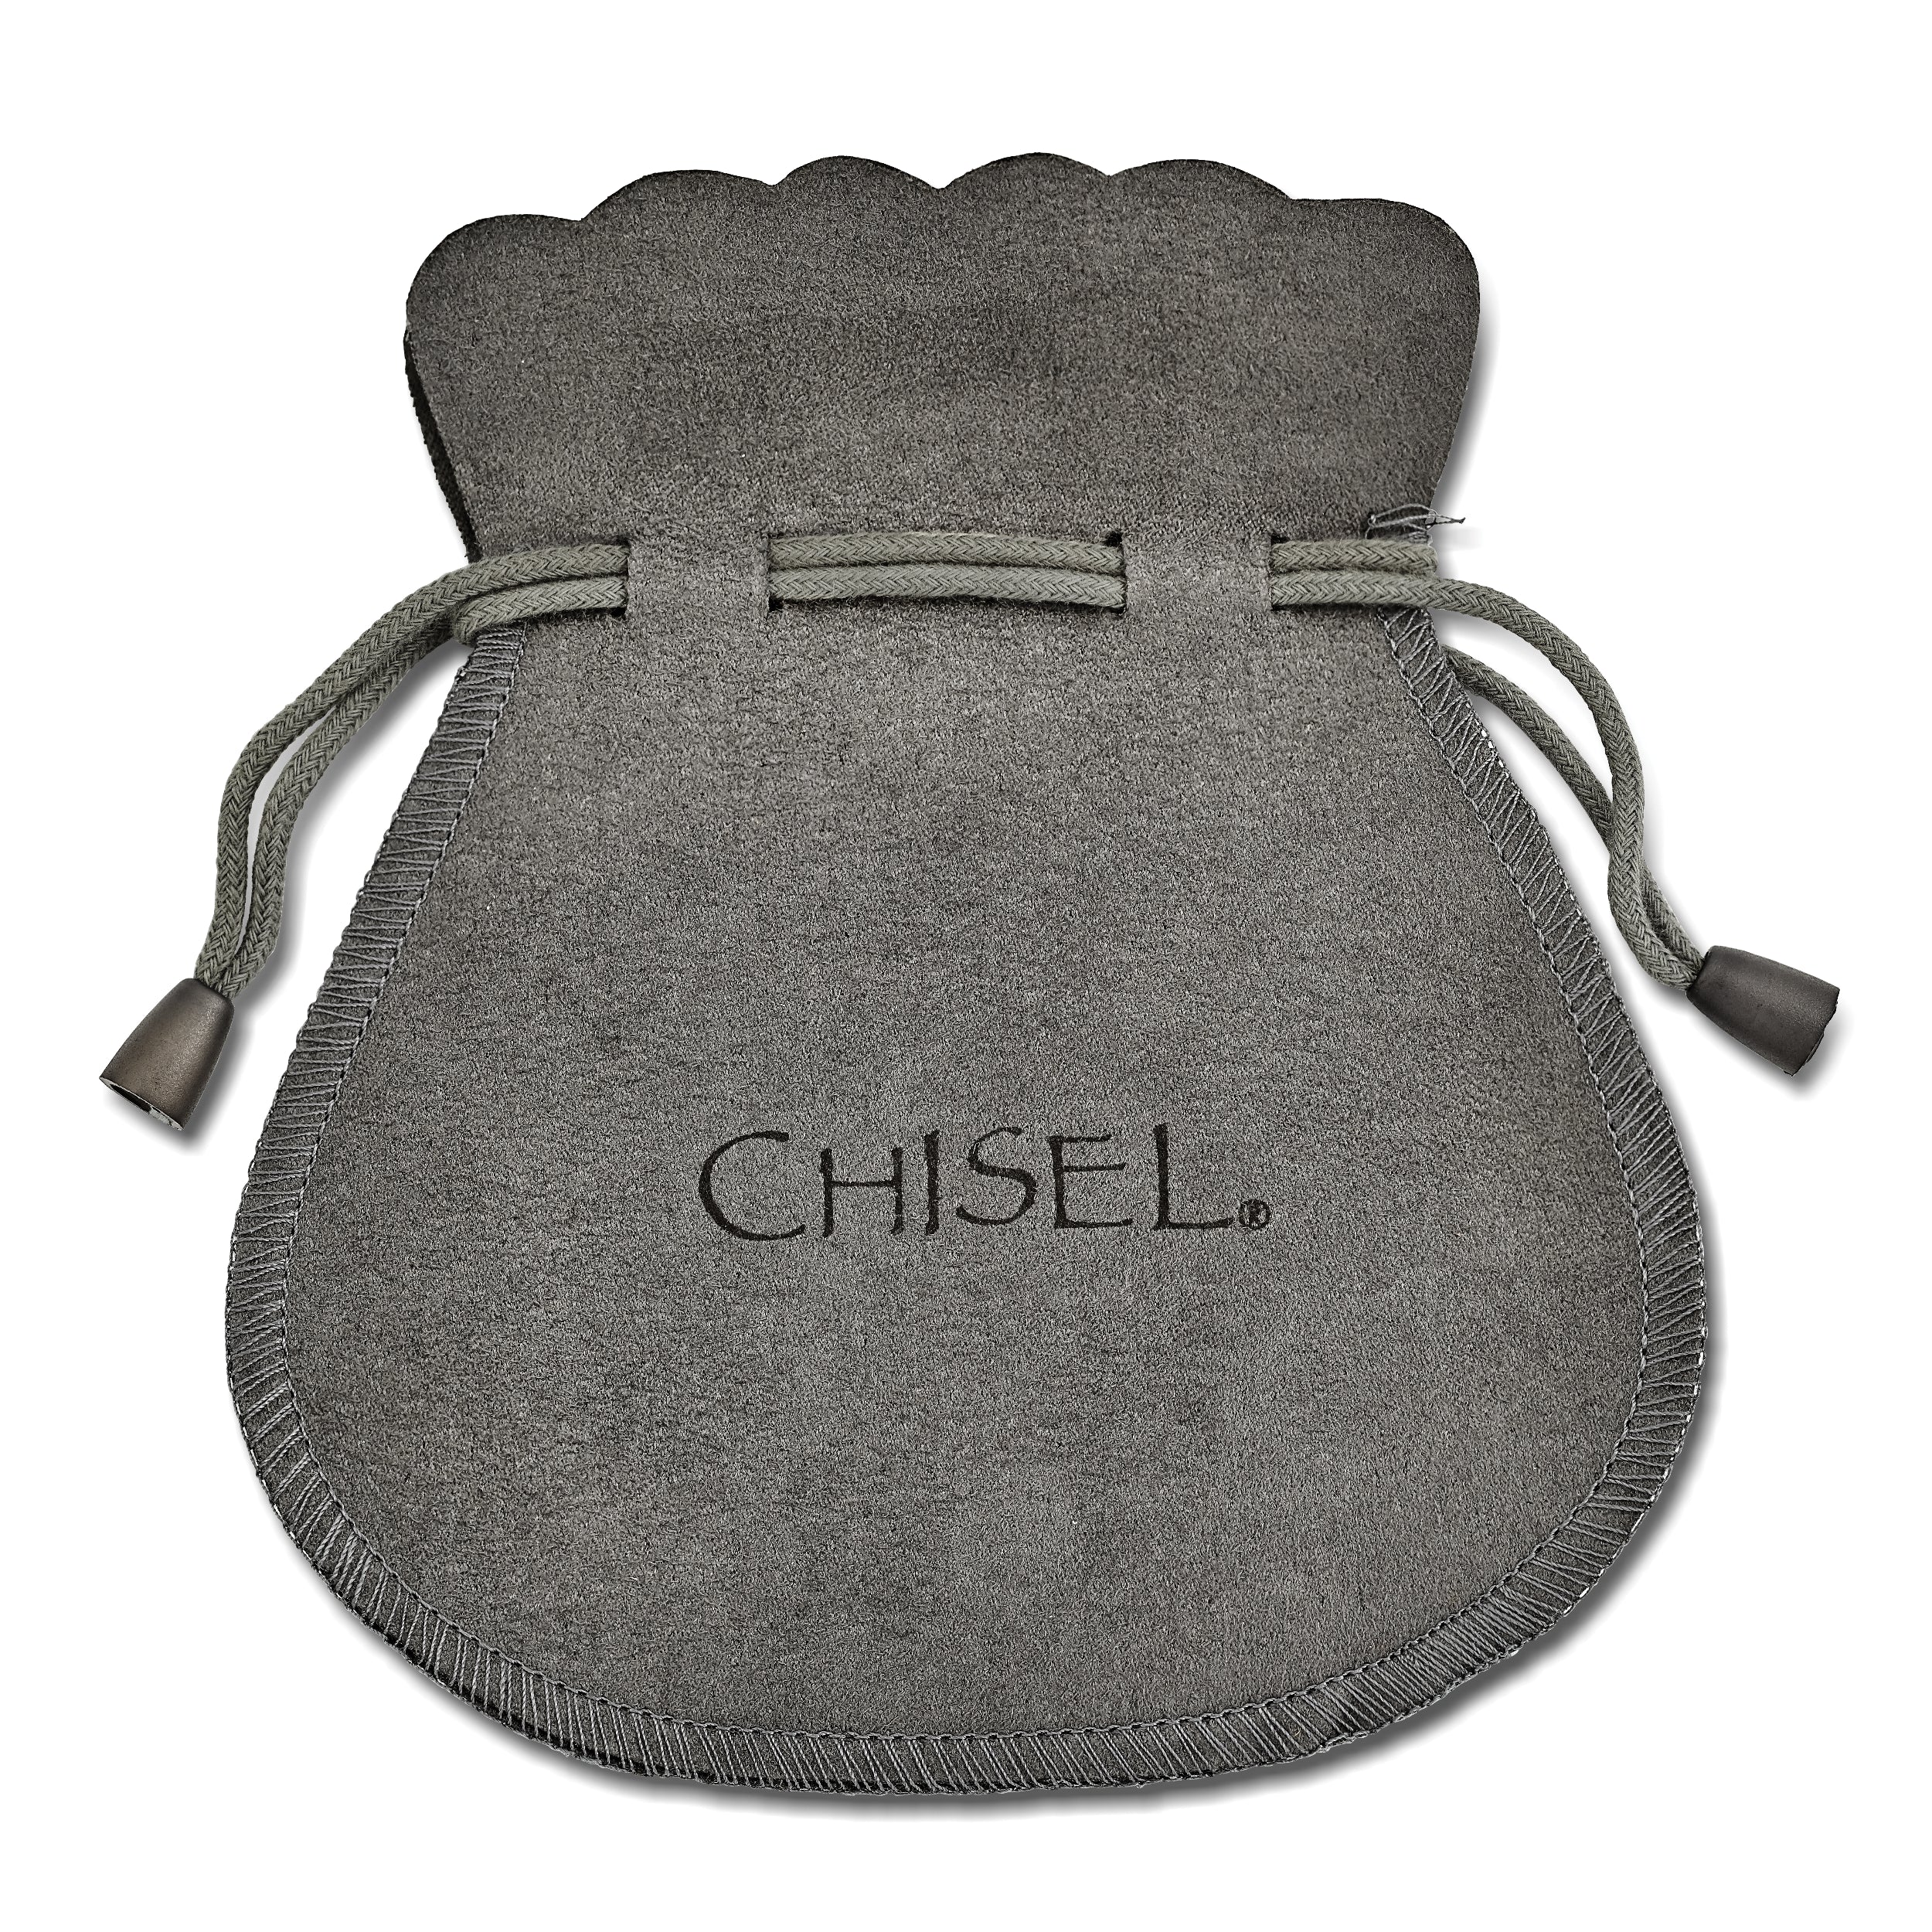 Chisel Stainless Steel Polished Black IP-plated 8.5 inch Fancy Link Bracelet